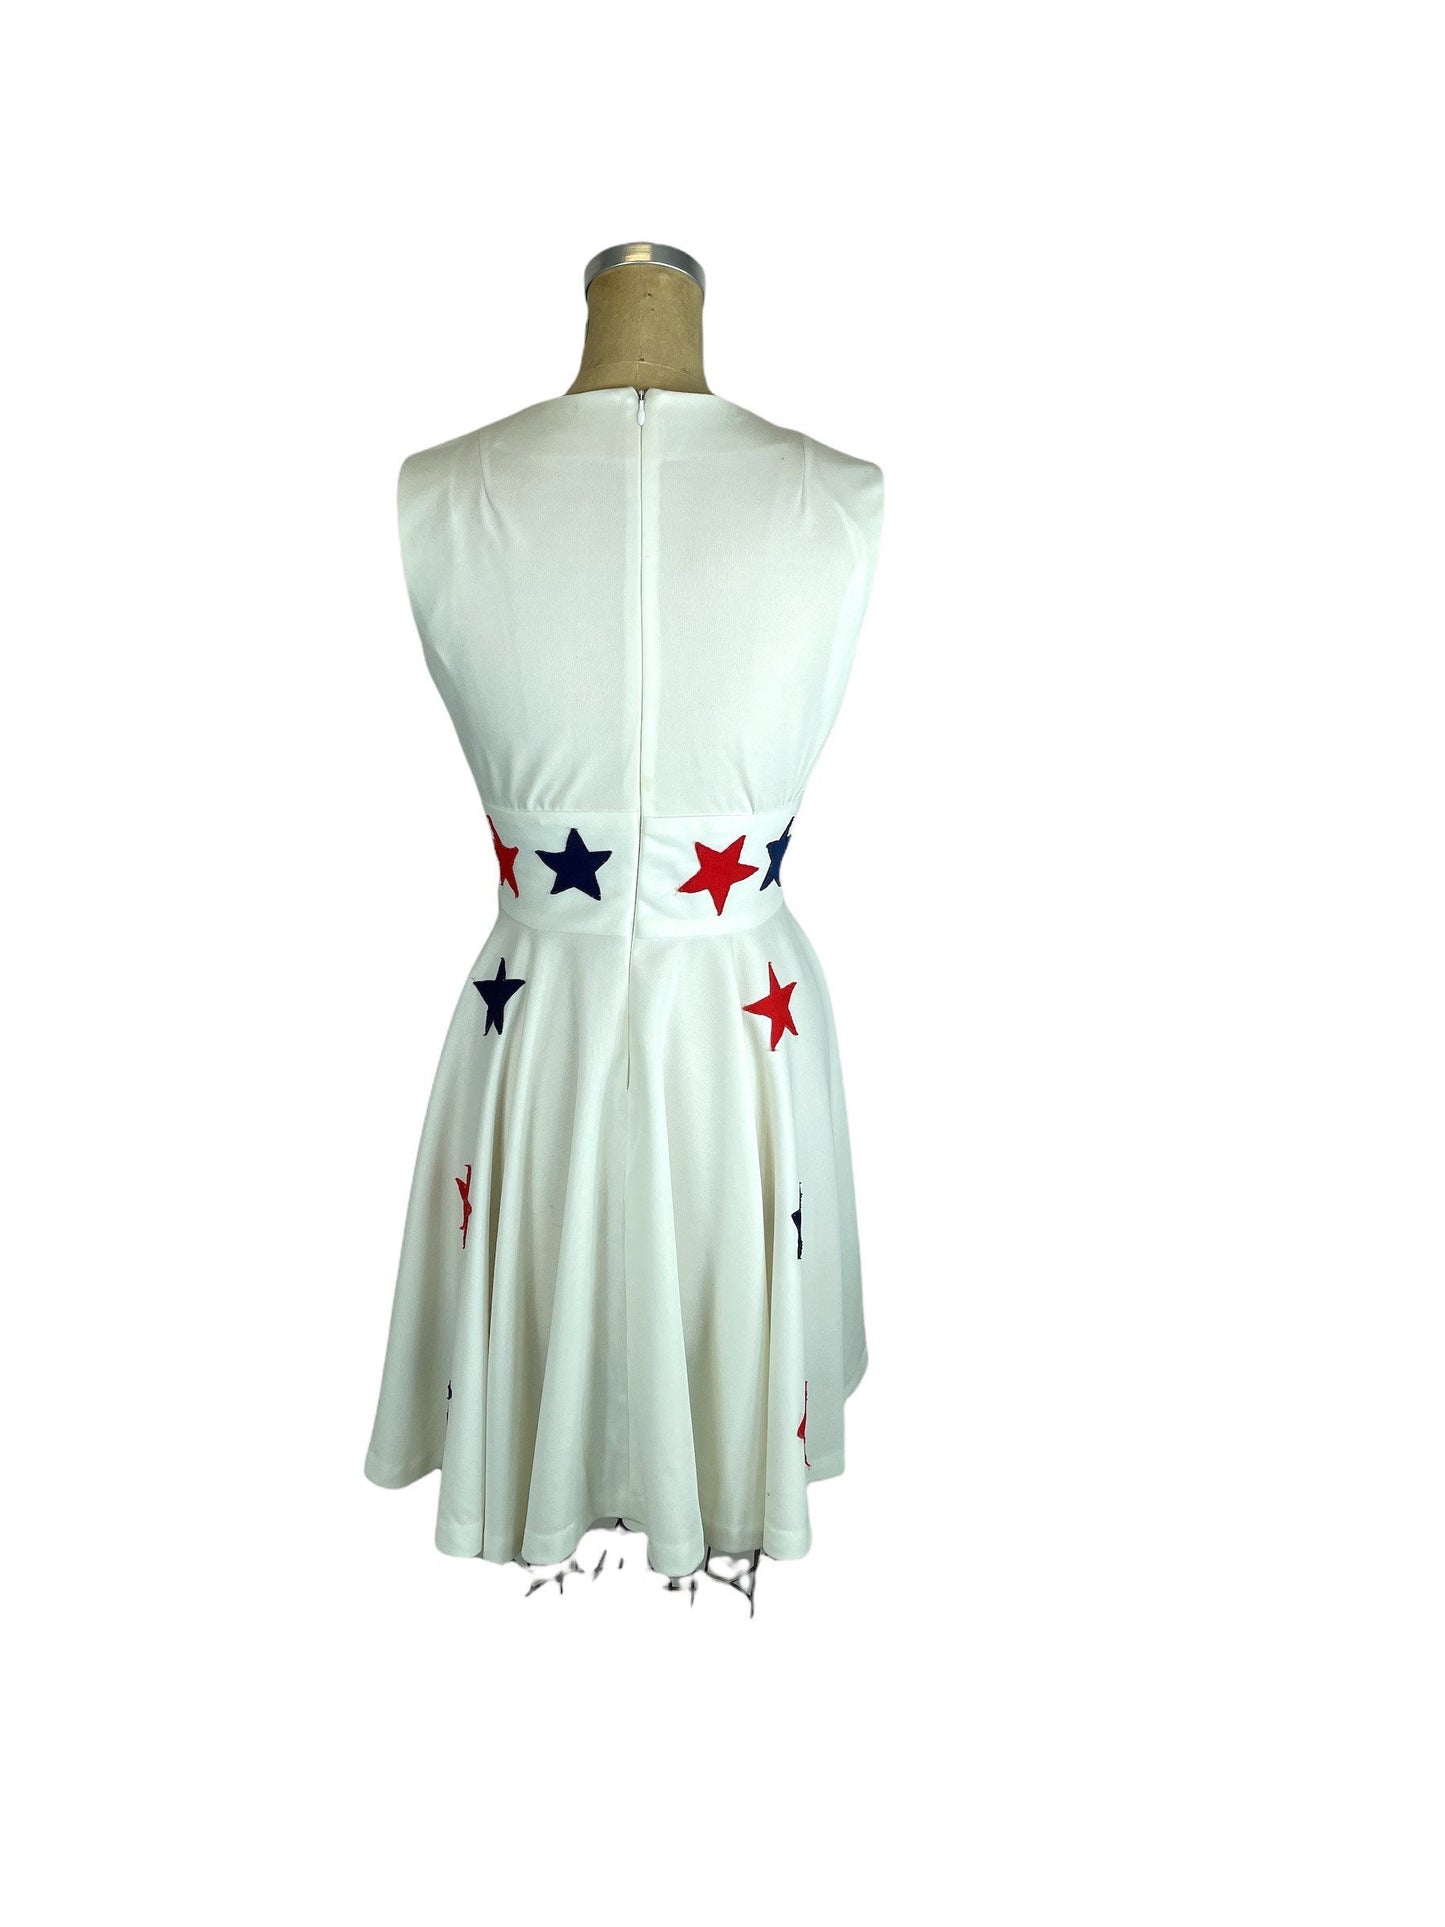 1970s stars dress with swirly skirt Size S